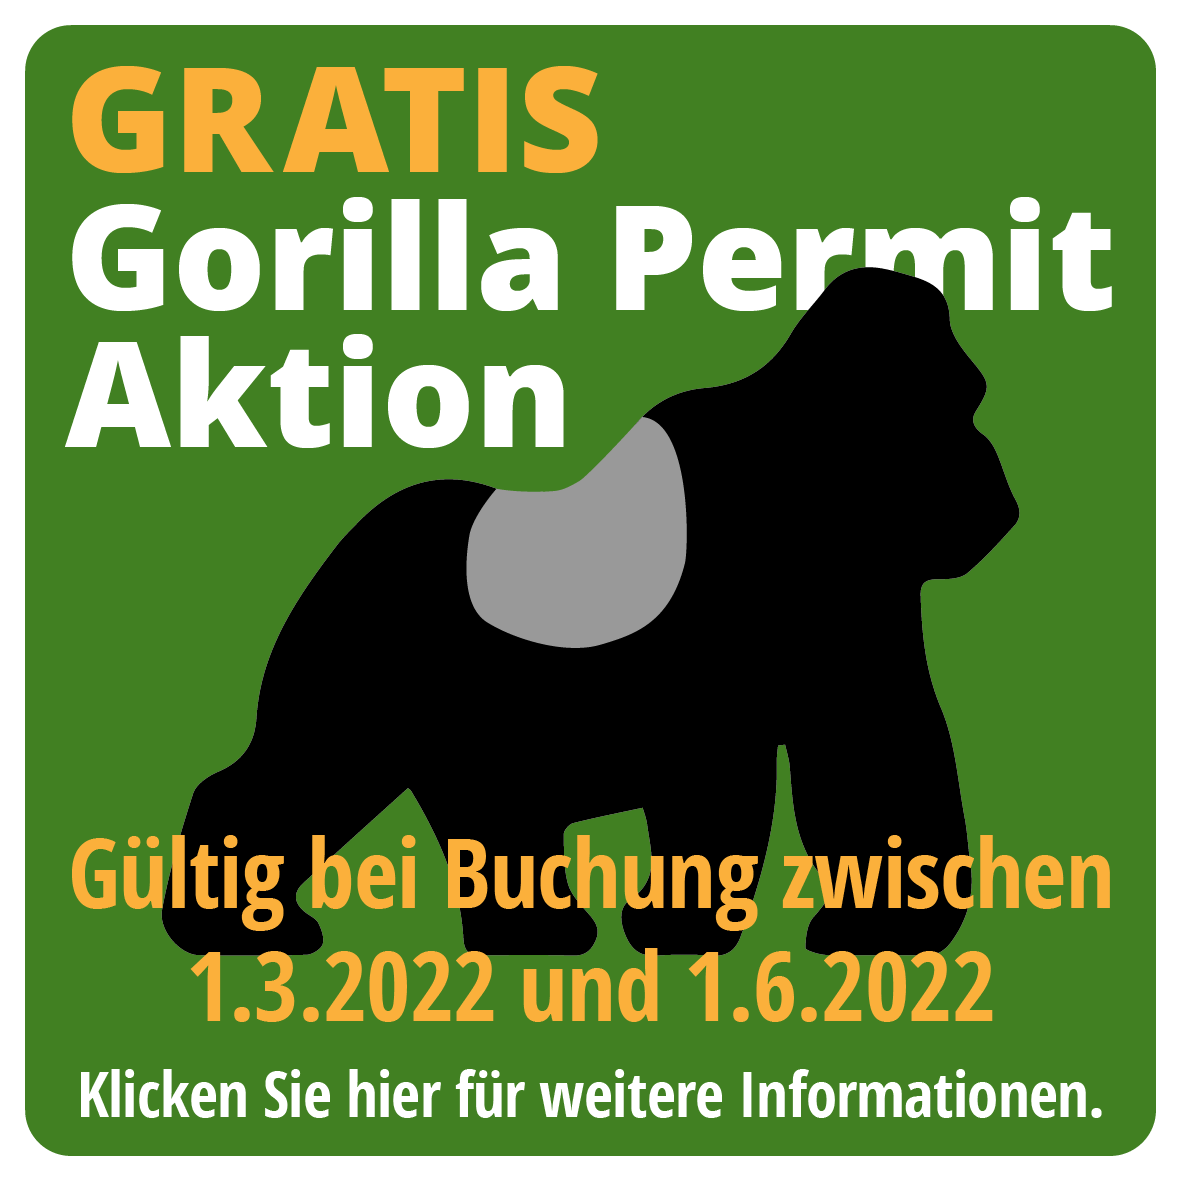 Gratis Gorilla Permit Aktion